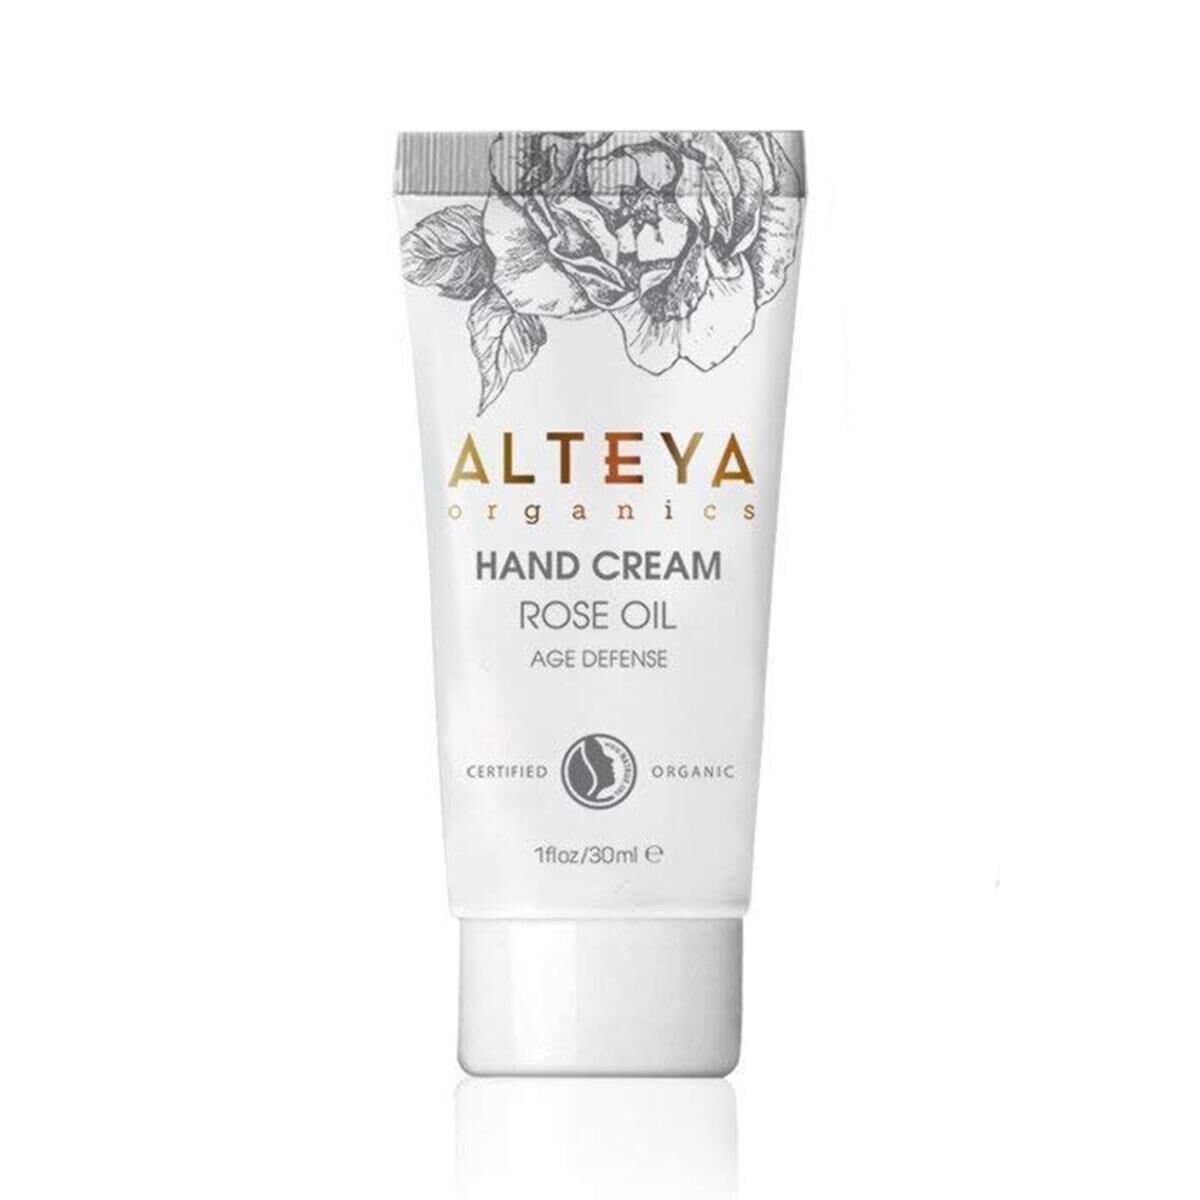 Alteya Organics - Rose Oil Hand Cream